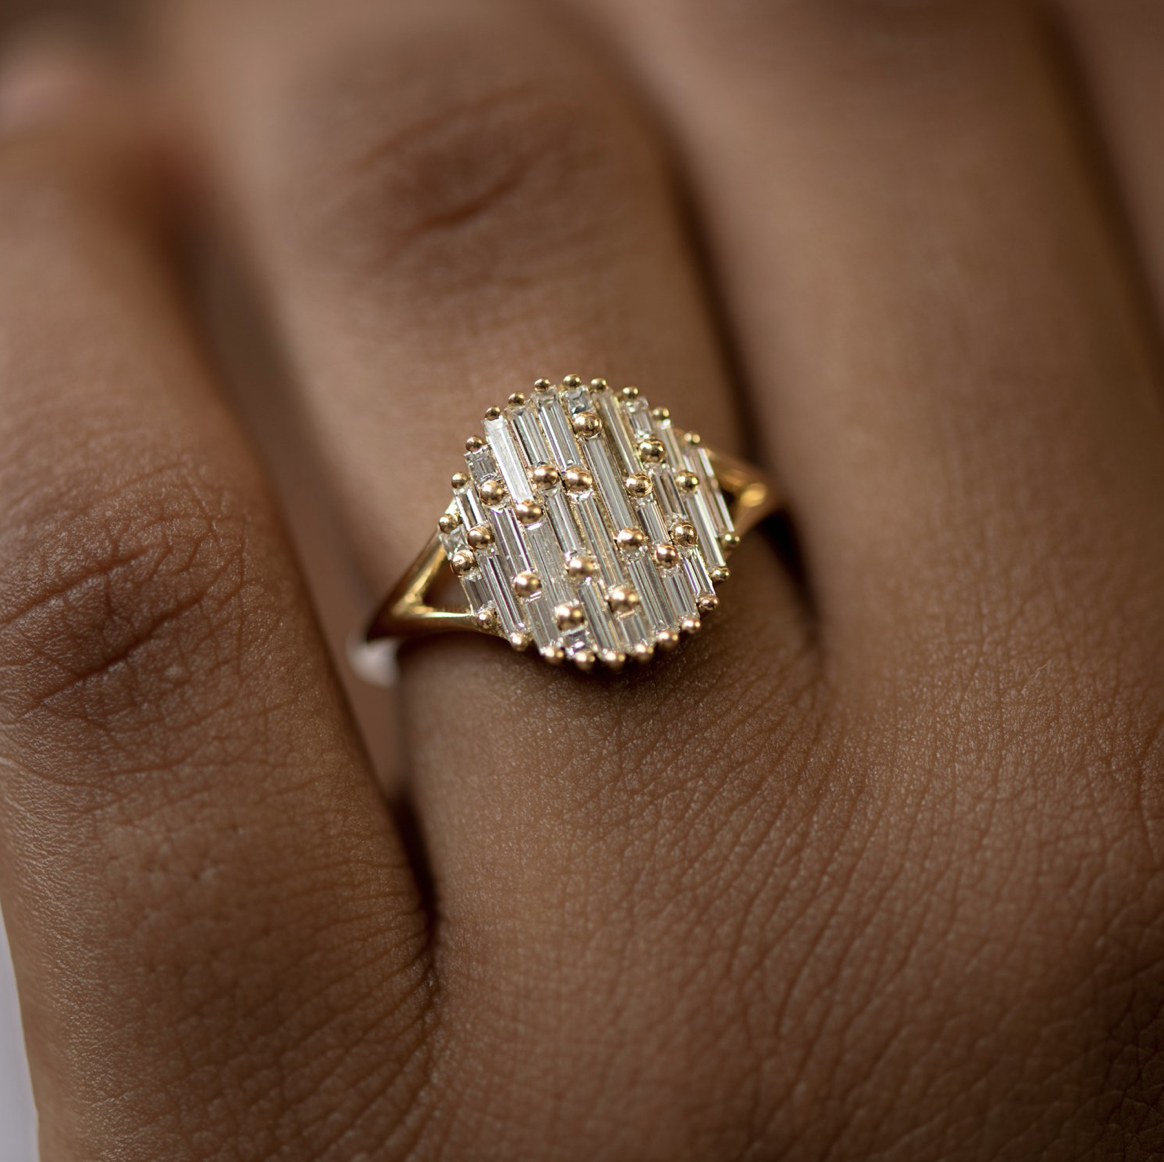 Artëmer Light Catcher Baguette Diamond Cluster Ring